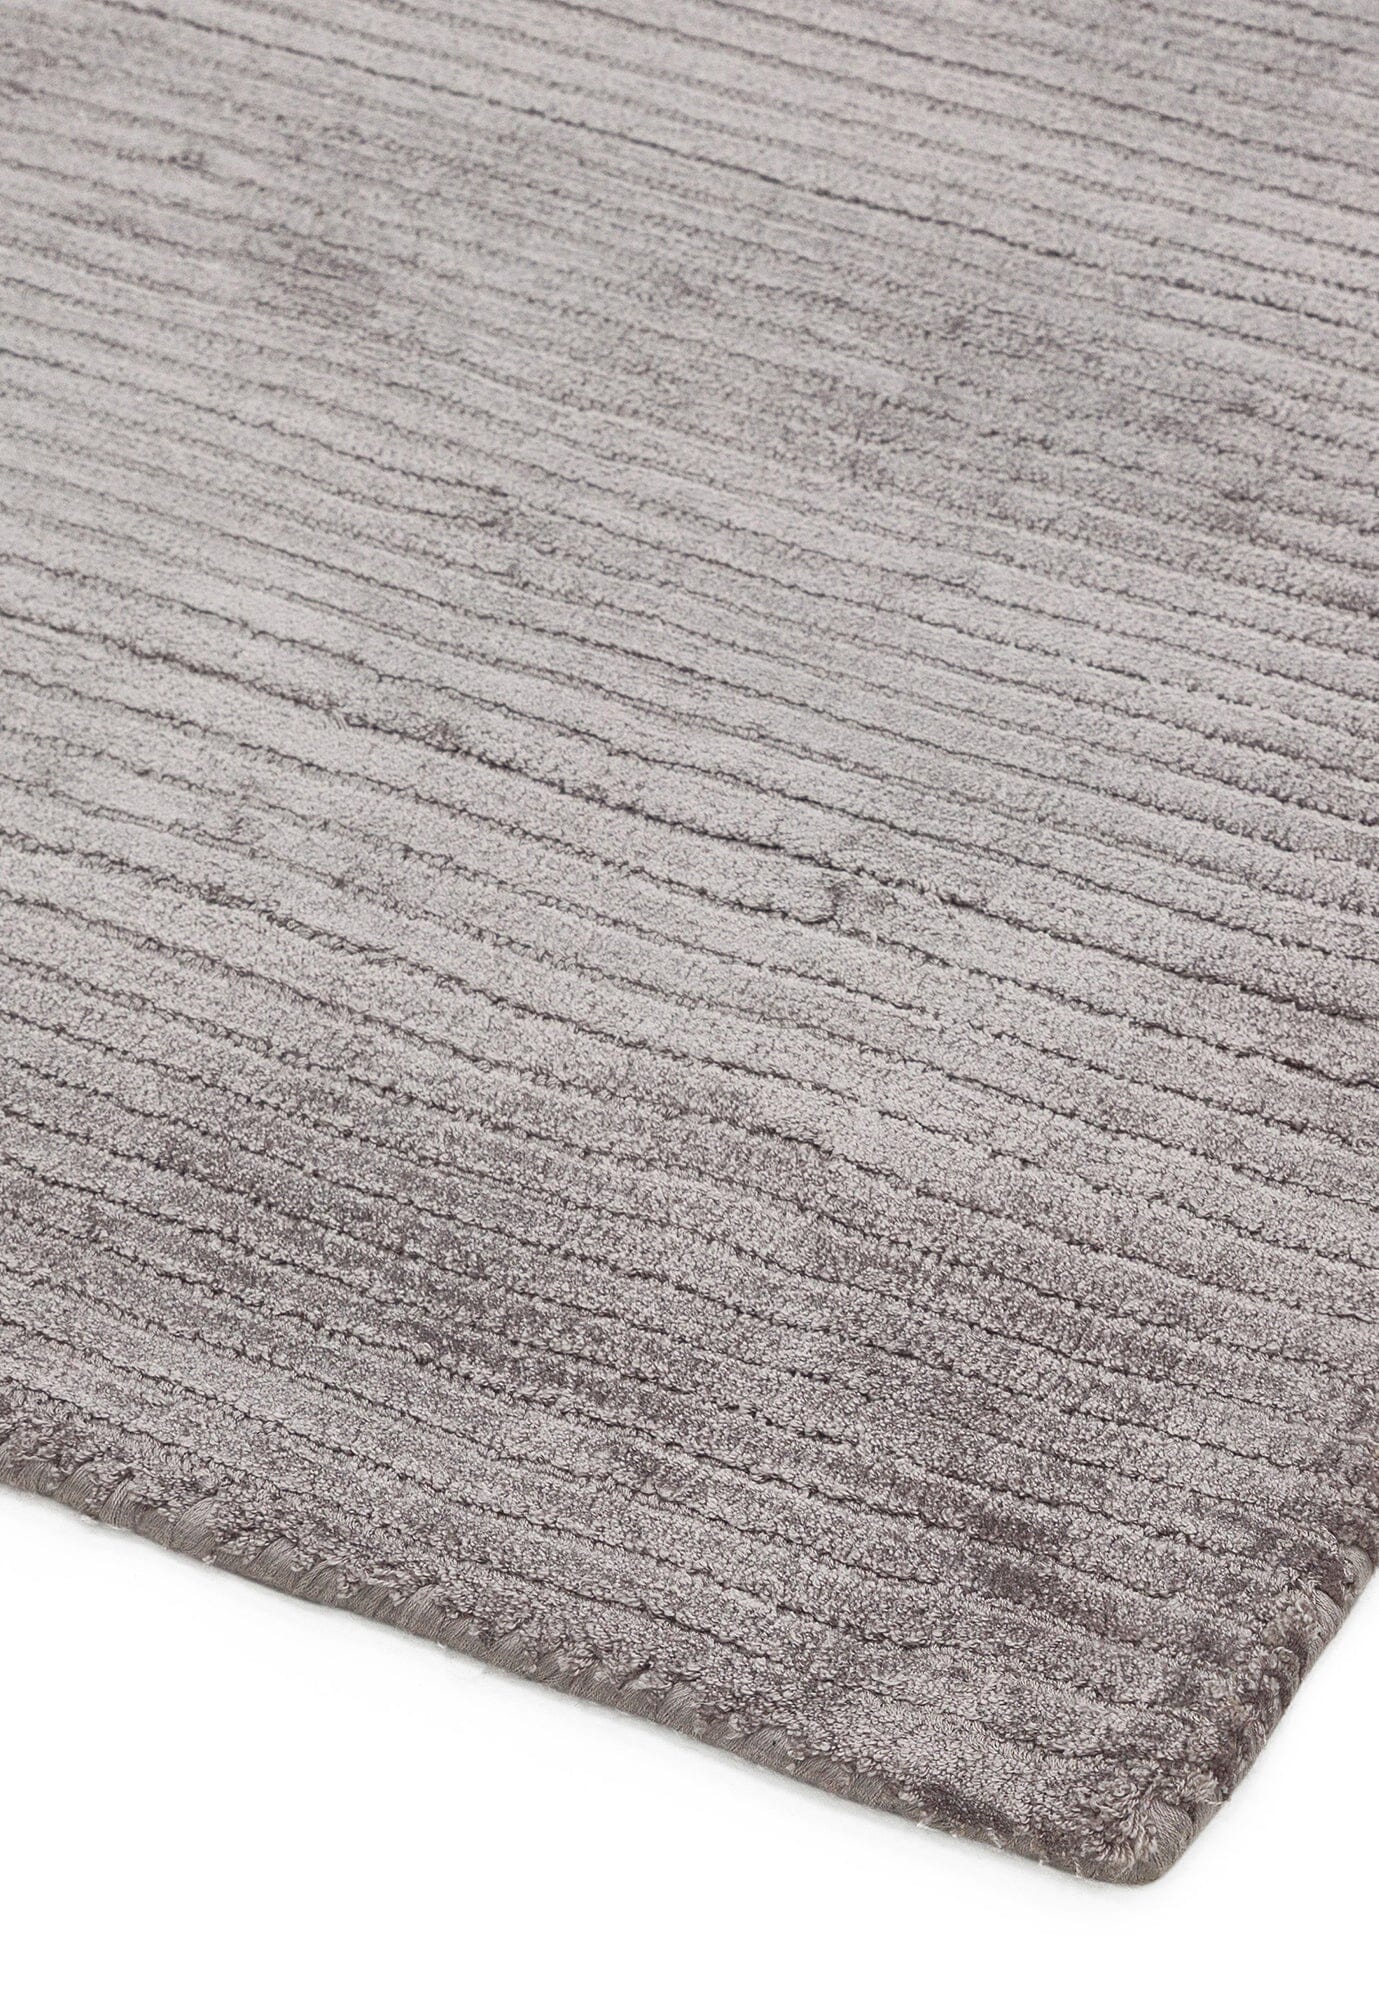 Asiatic Carpets Bellagio Hand Woven Rug Silver - 160 x 230cm